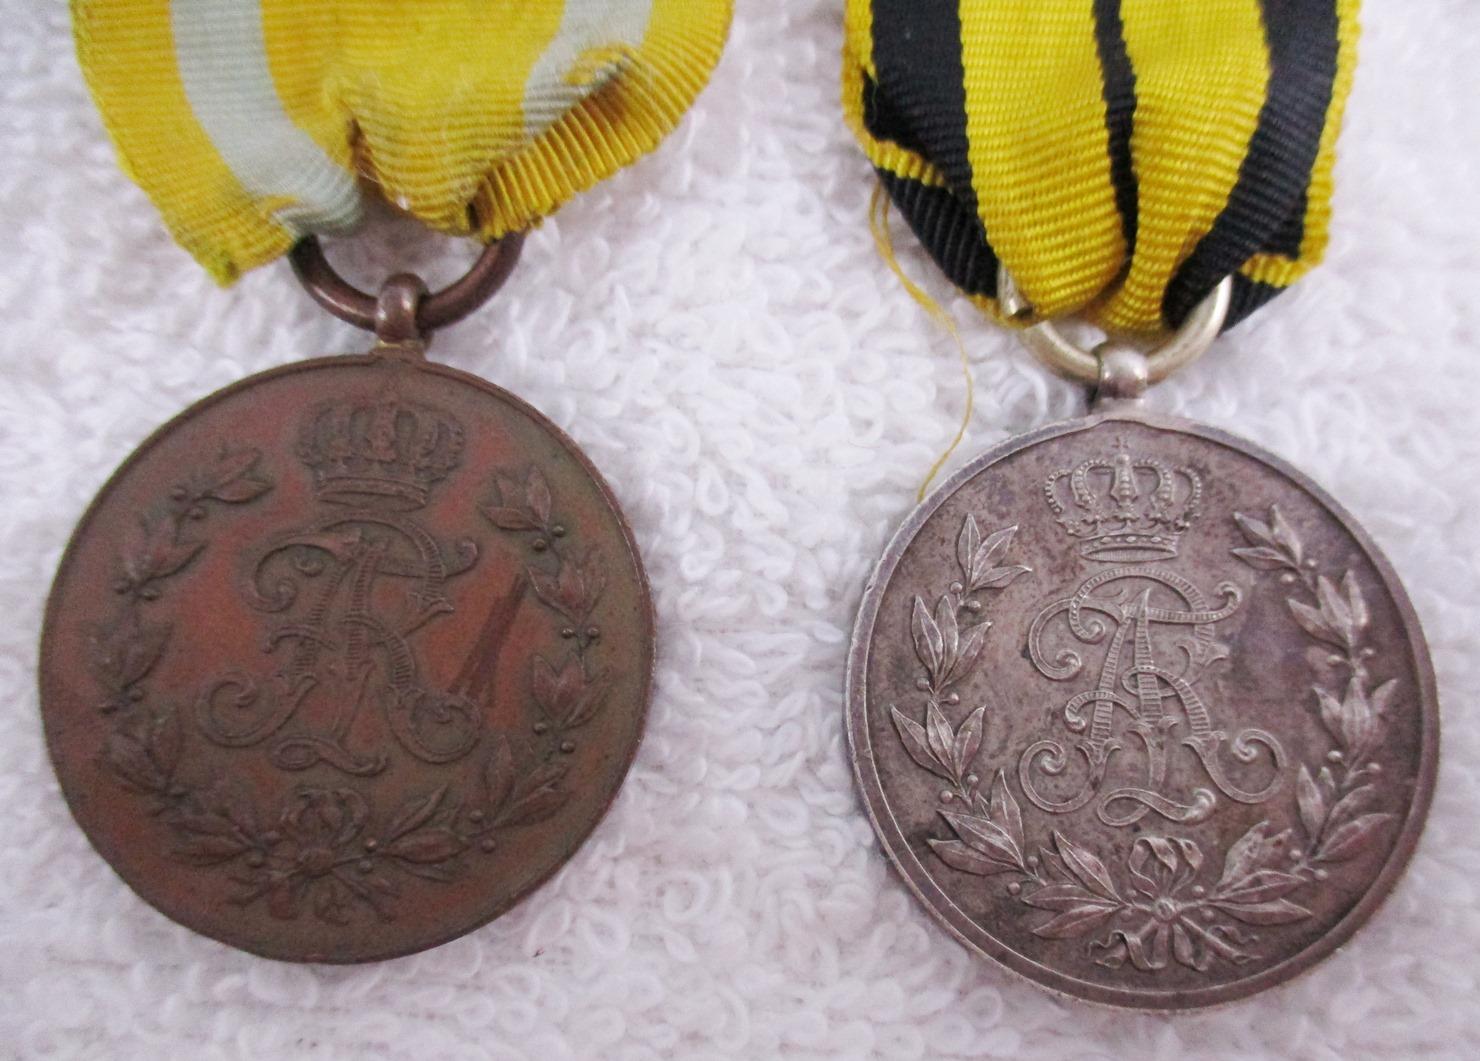 4pcs-WW1 Period German Medals